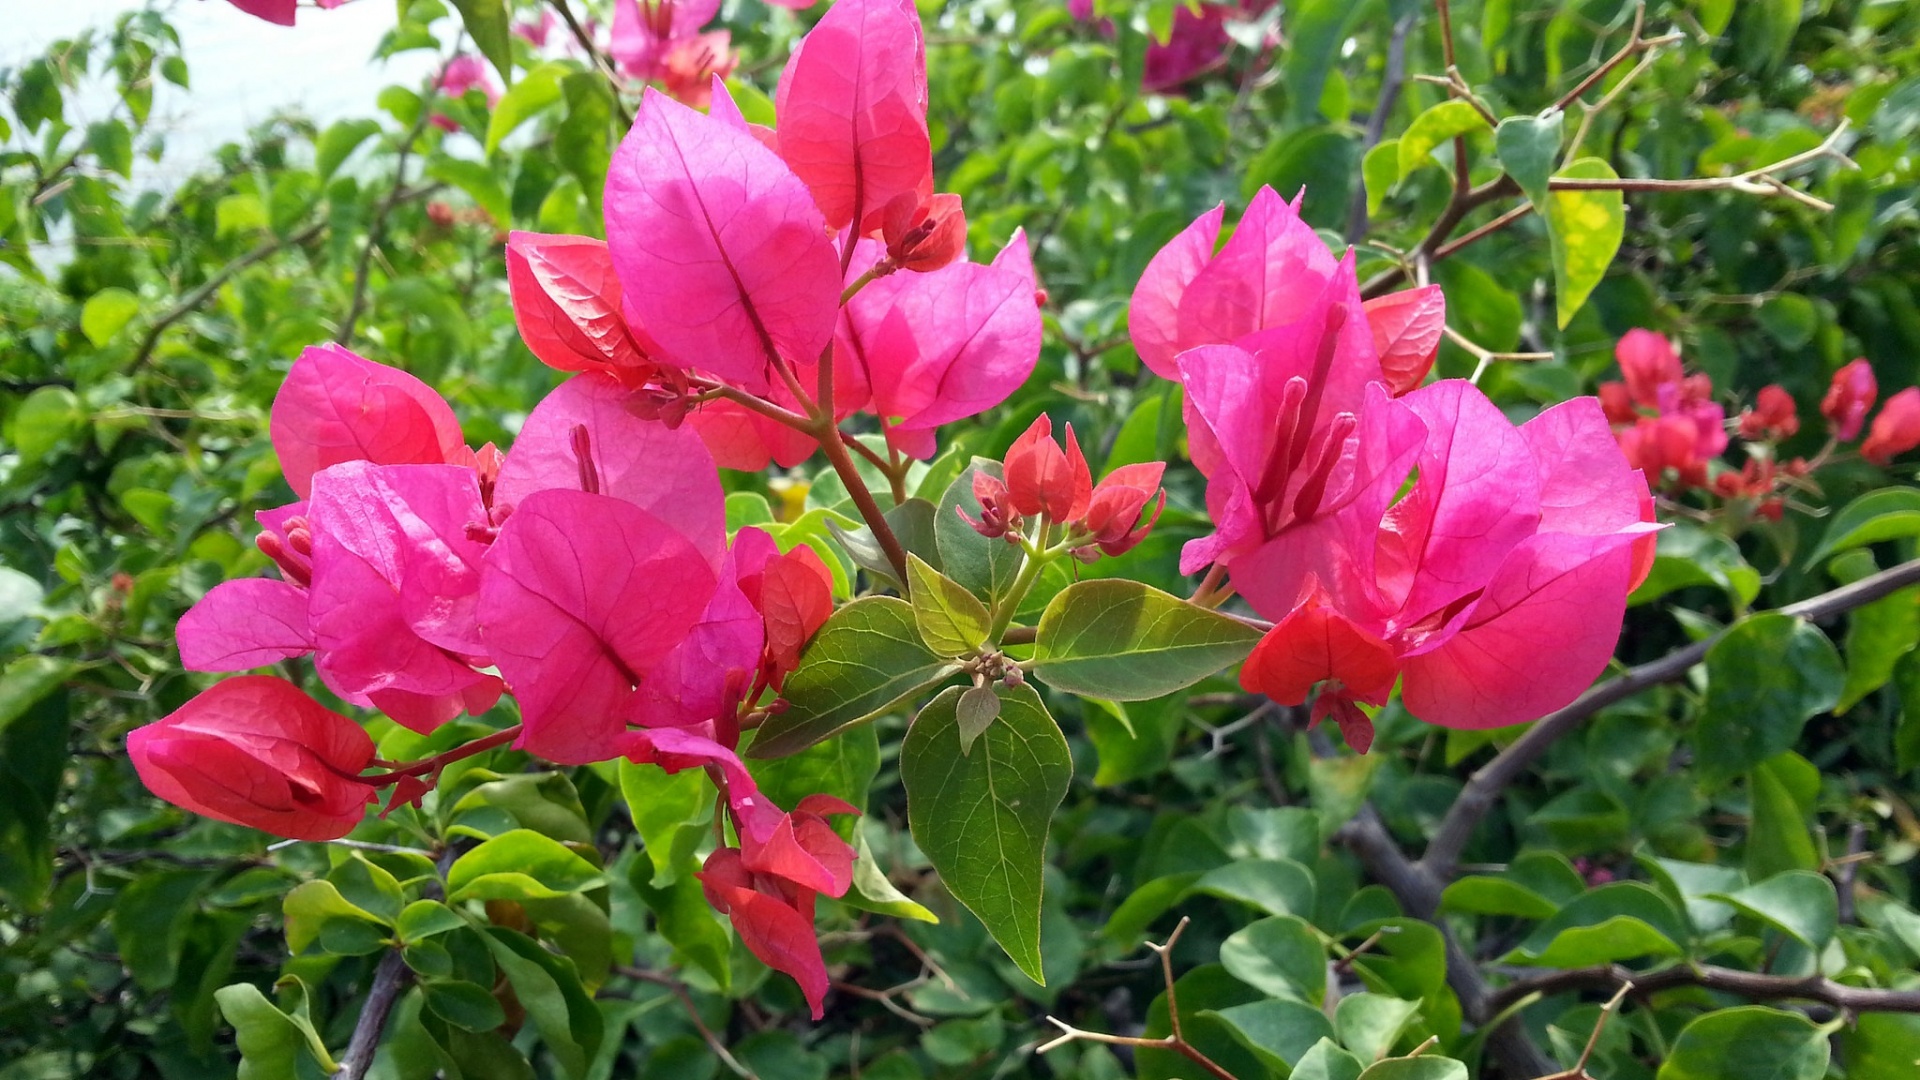 Bougainvillea flores, rosa brillante